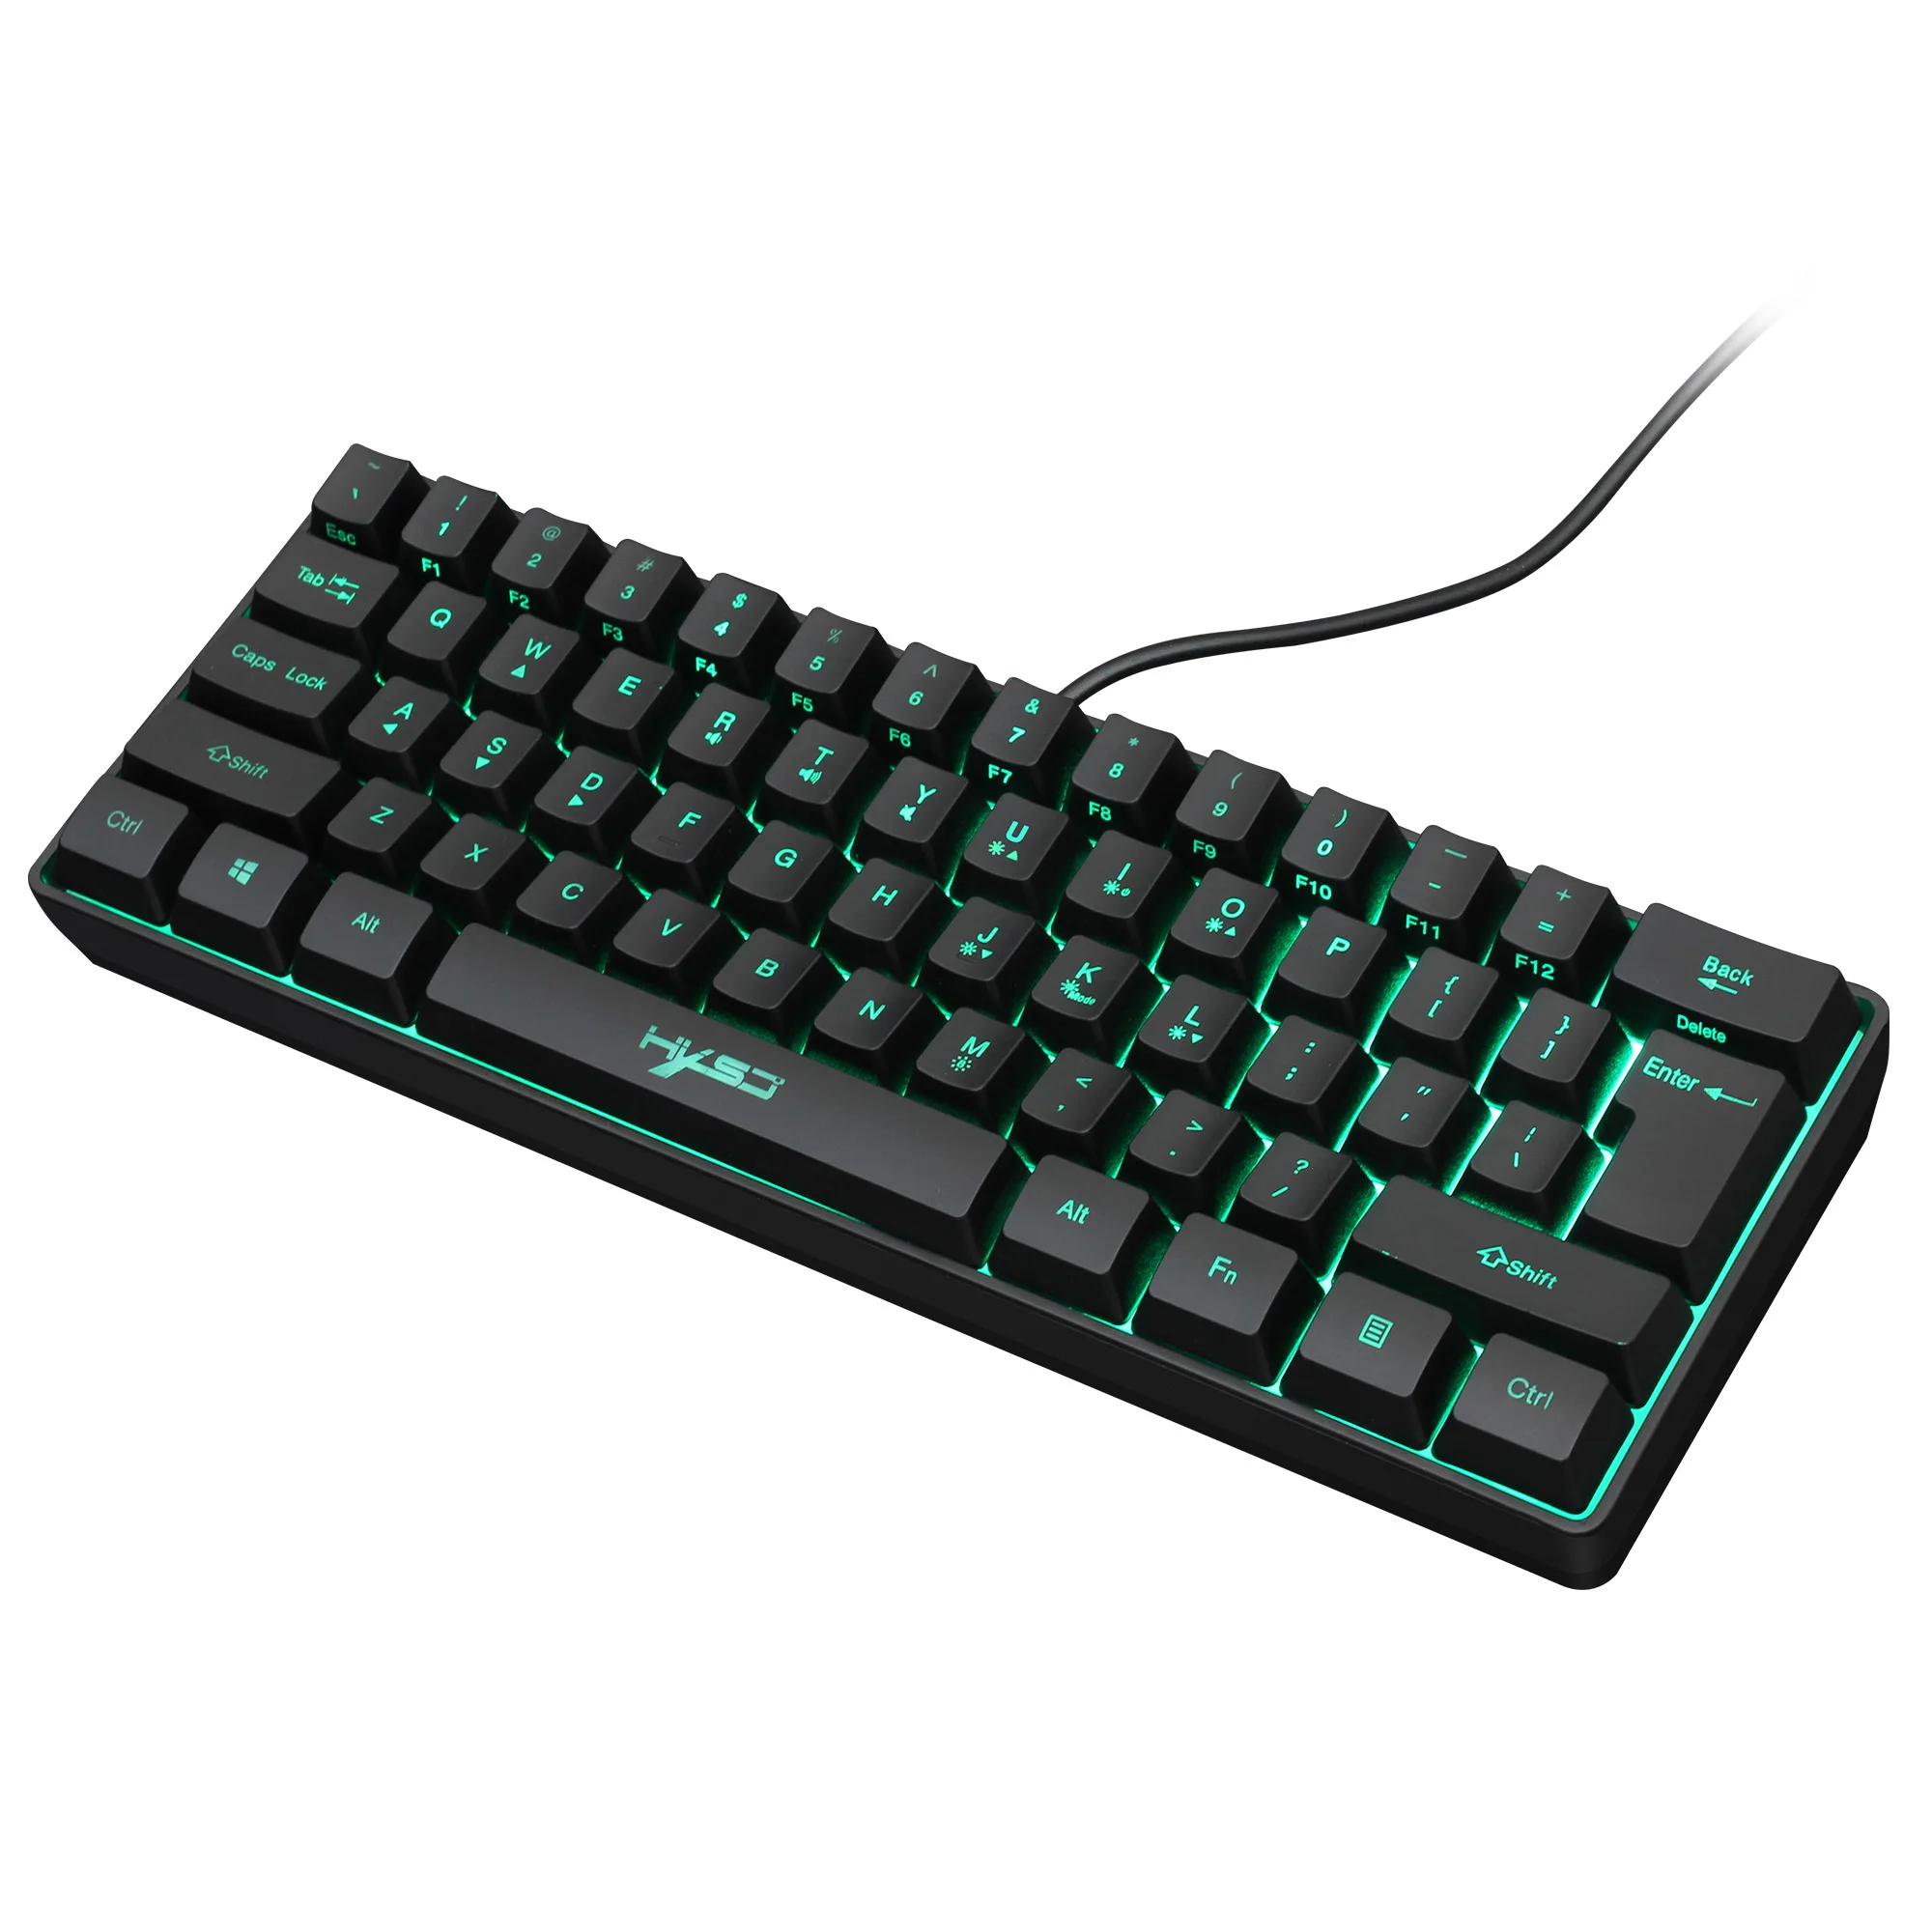 

V700 Gaming Keyboard USB Wired RGB Backlit 61 Keys Membrane keyboard Mechanical Feeling gamer keyboards For PC Laptop